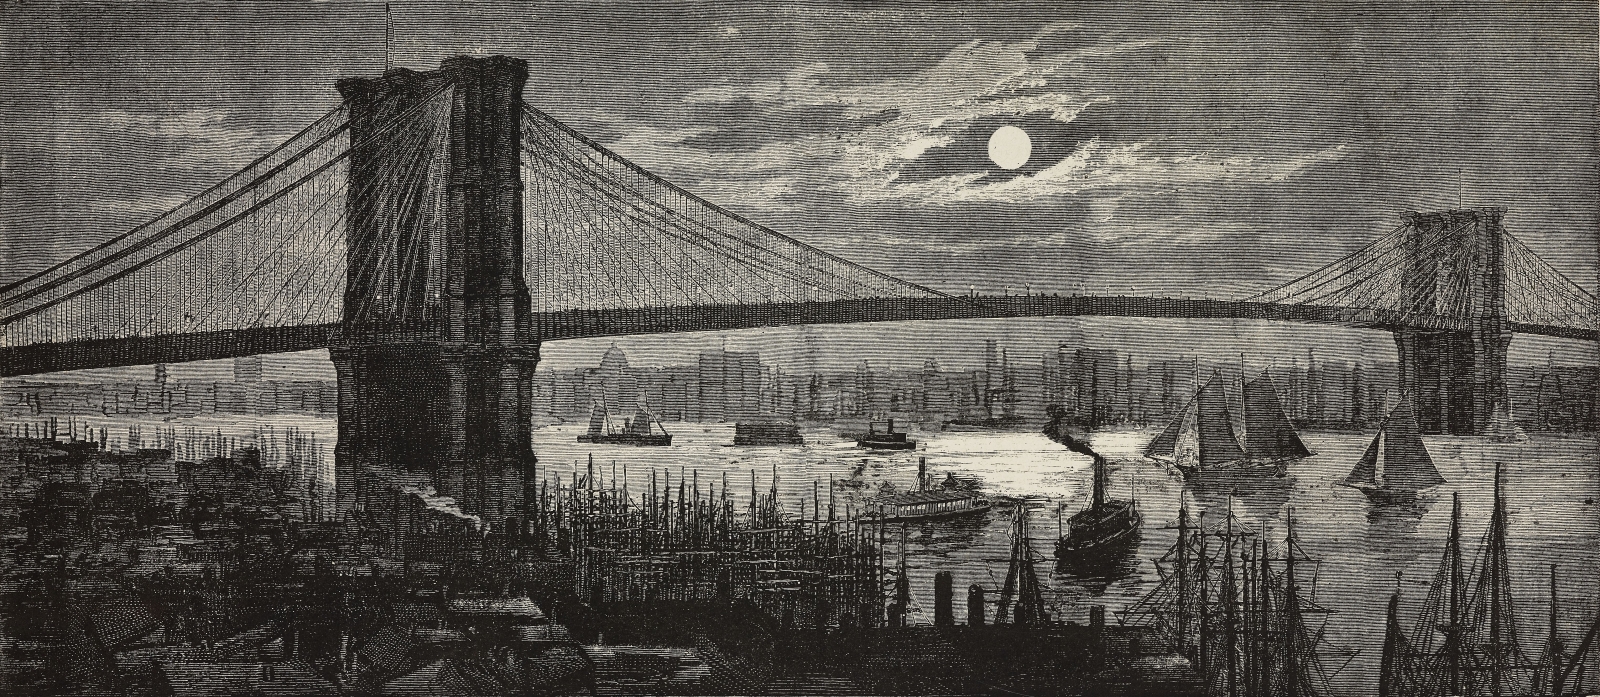 image of the brooklyn bridge